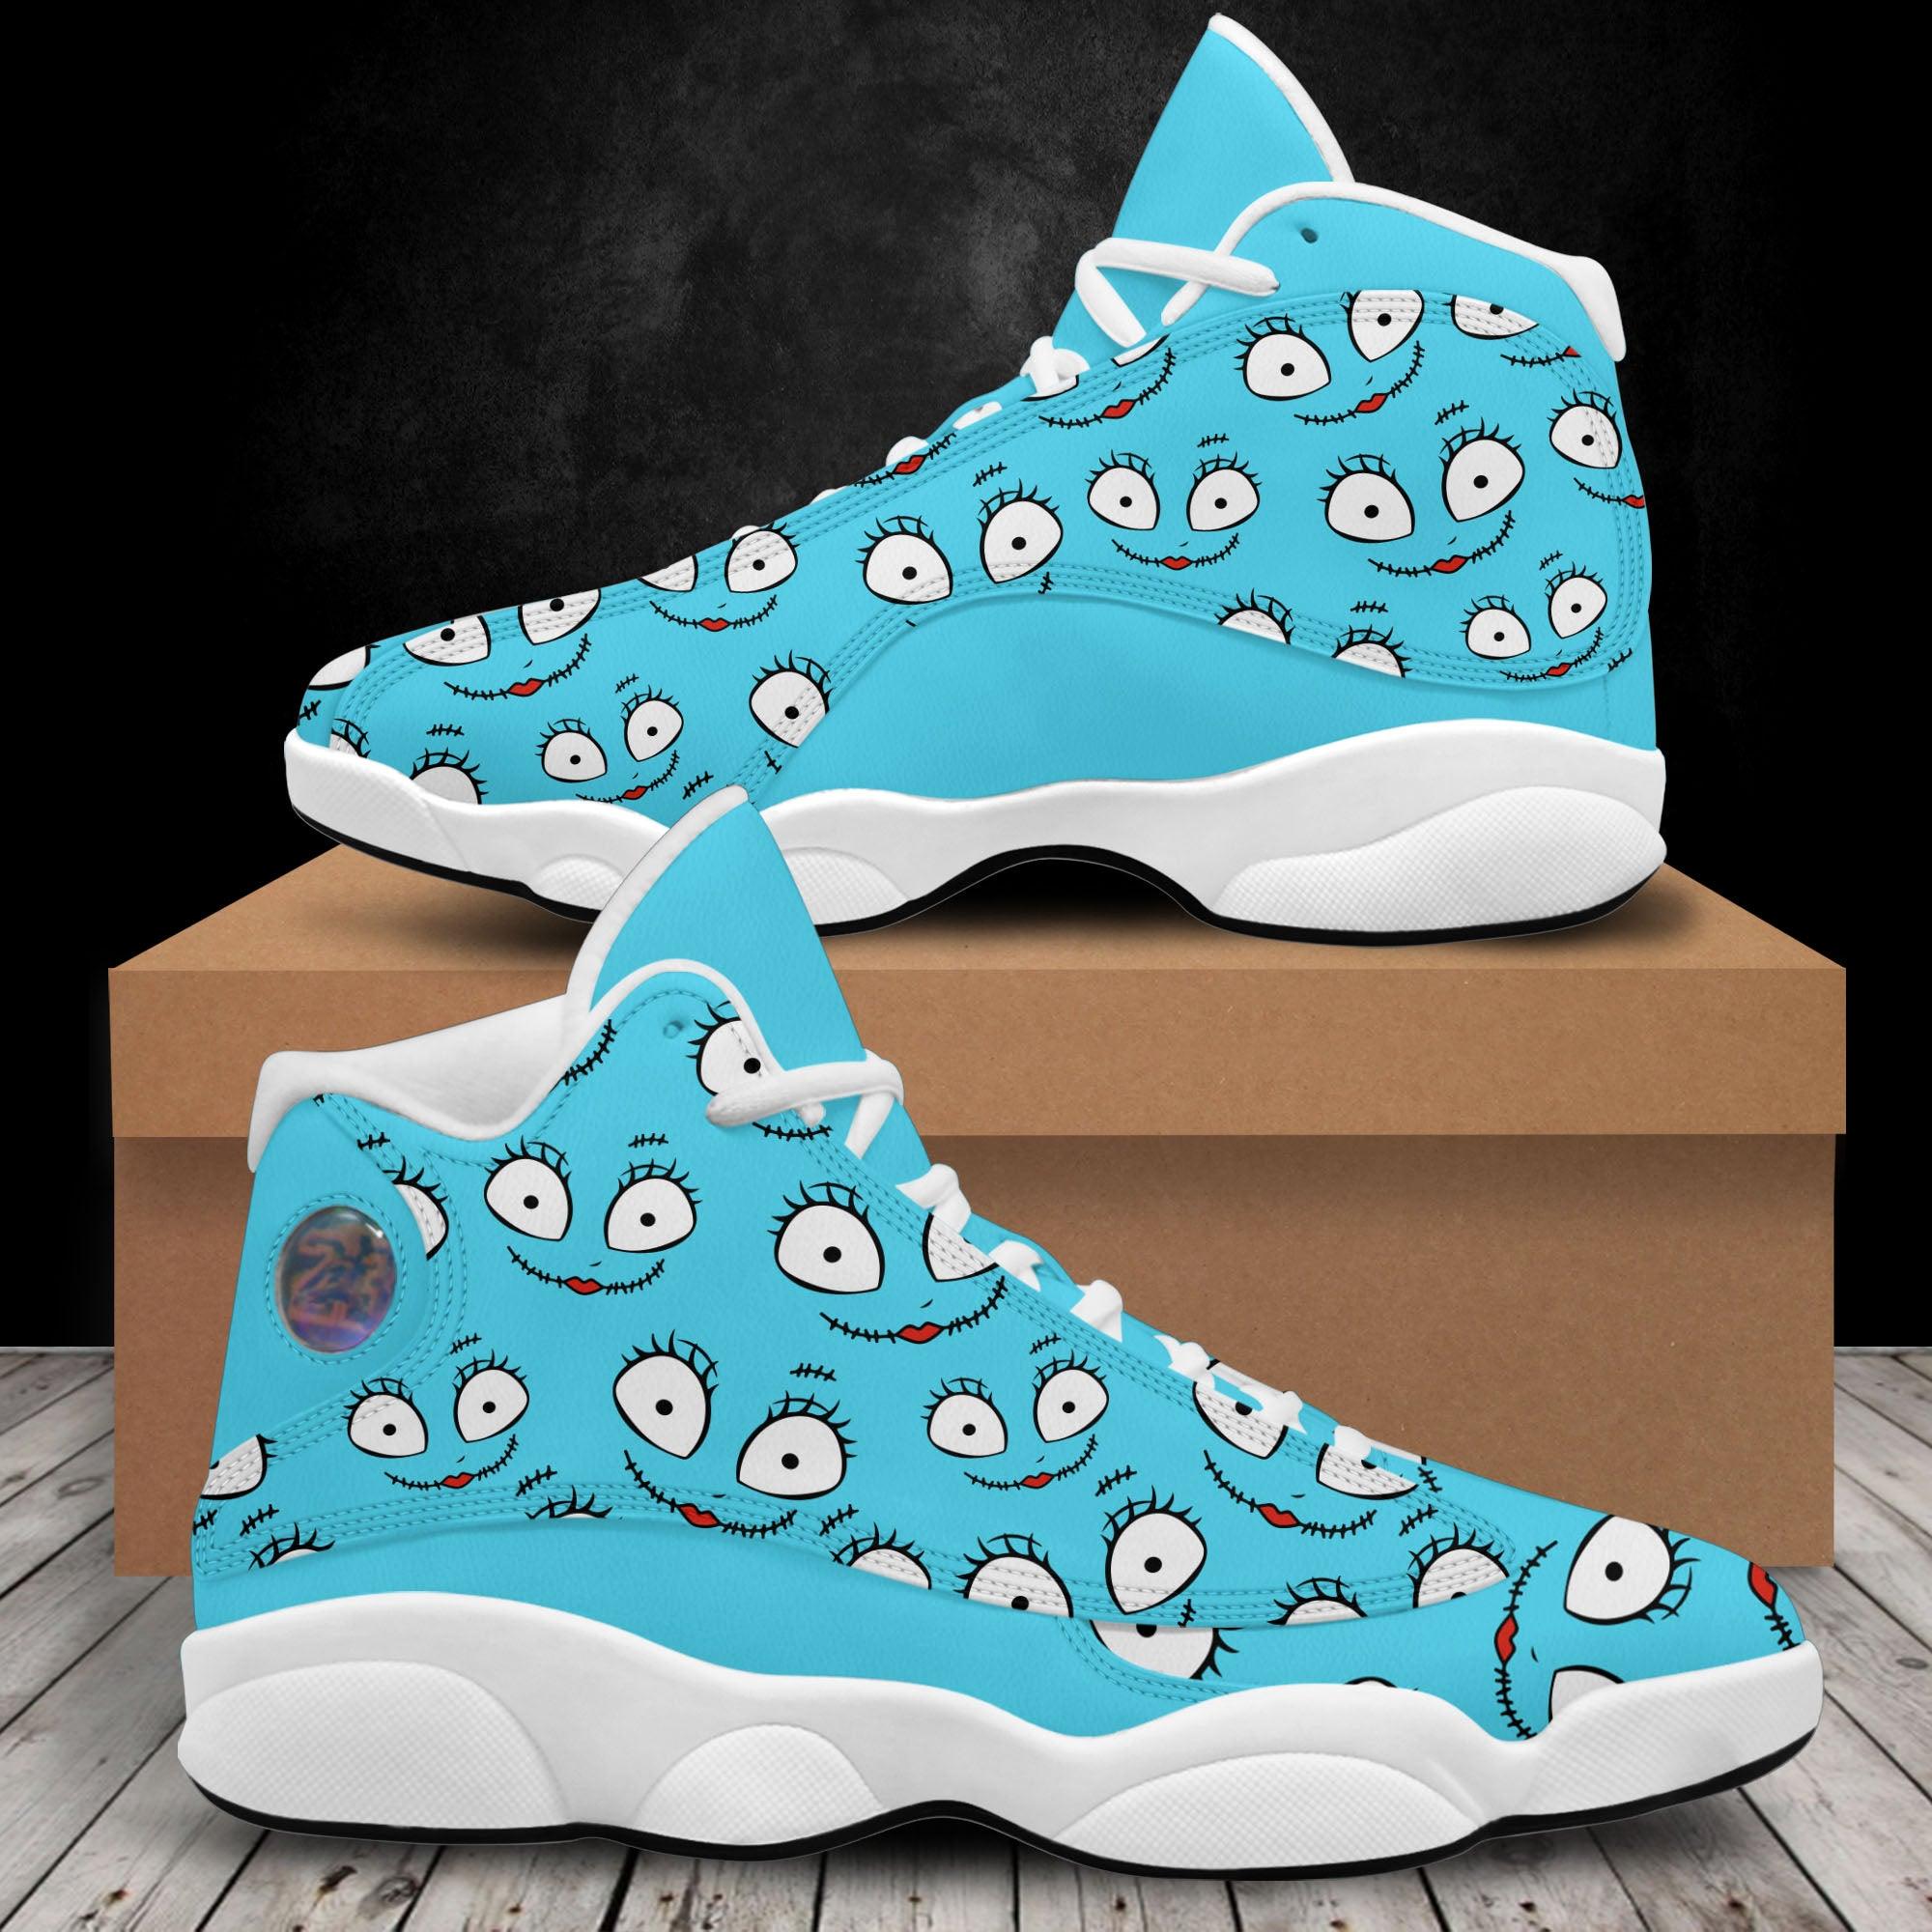 Nightmare Pattern Blue Women's Curved Basketball Shoes Sneaker - Wonder Skull